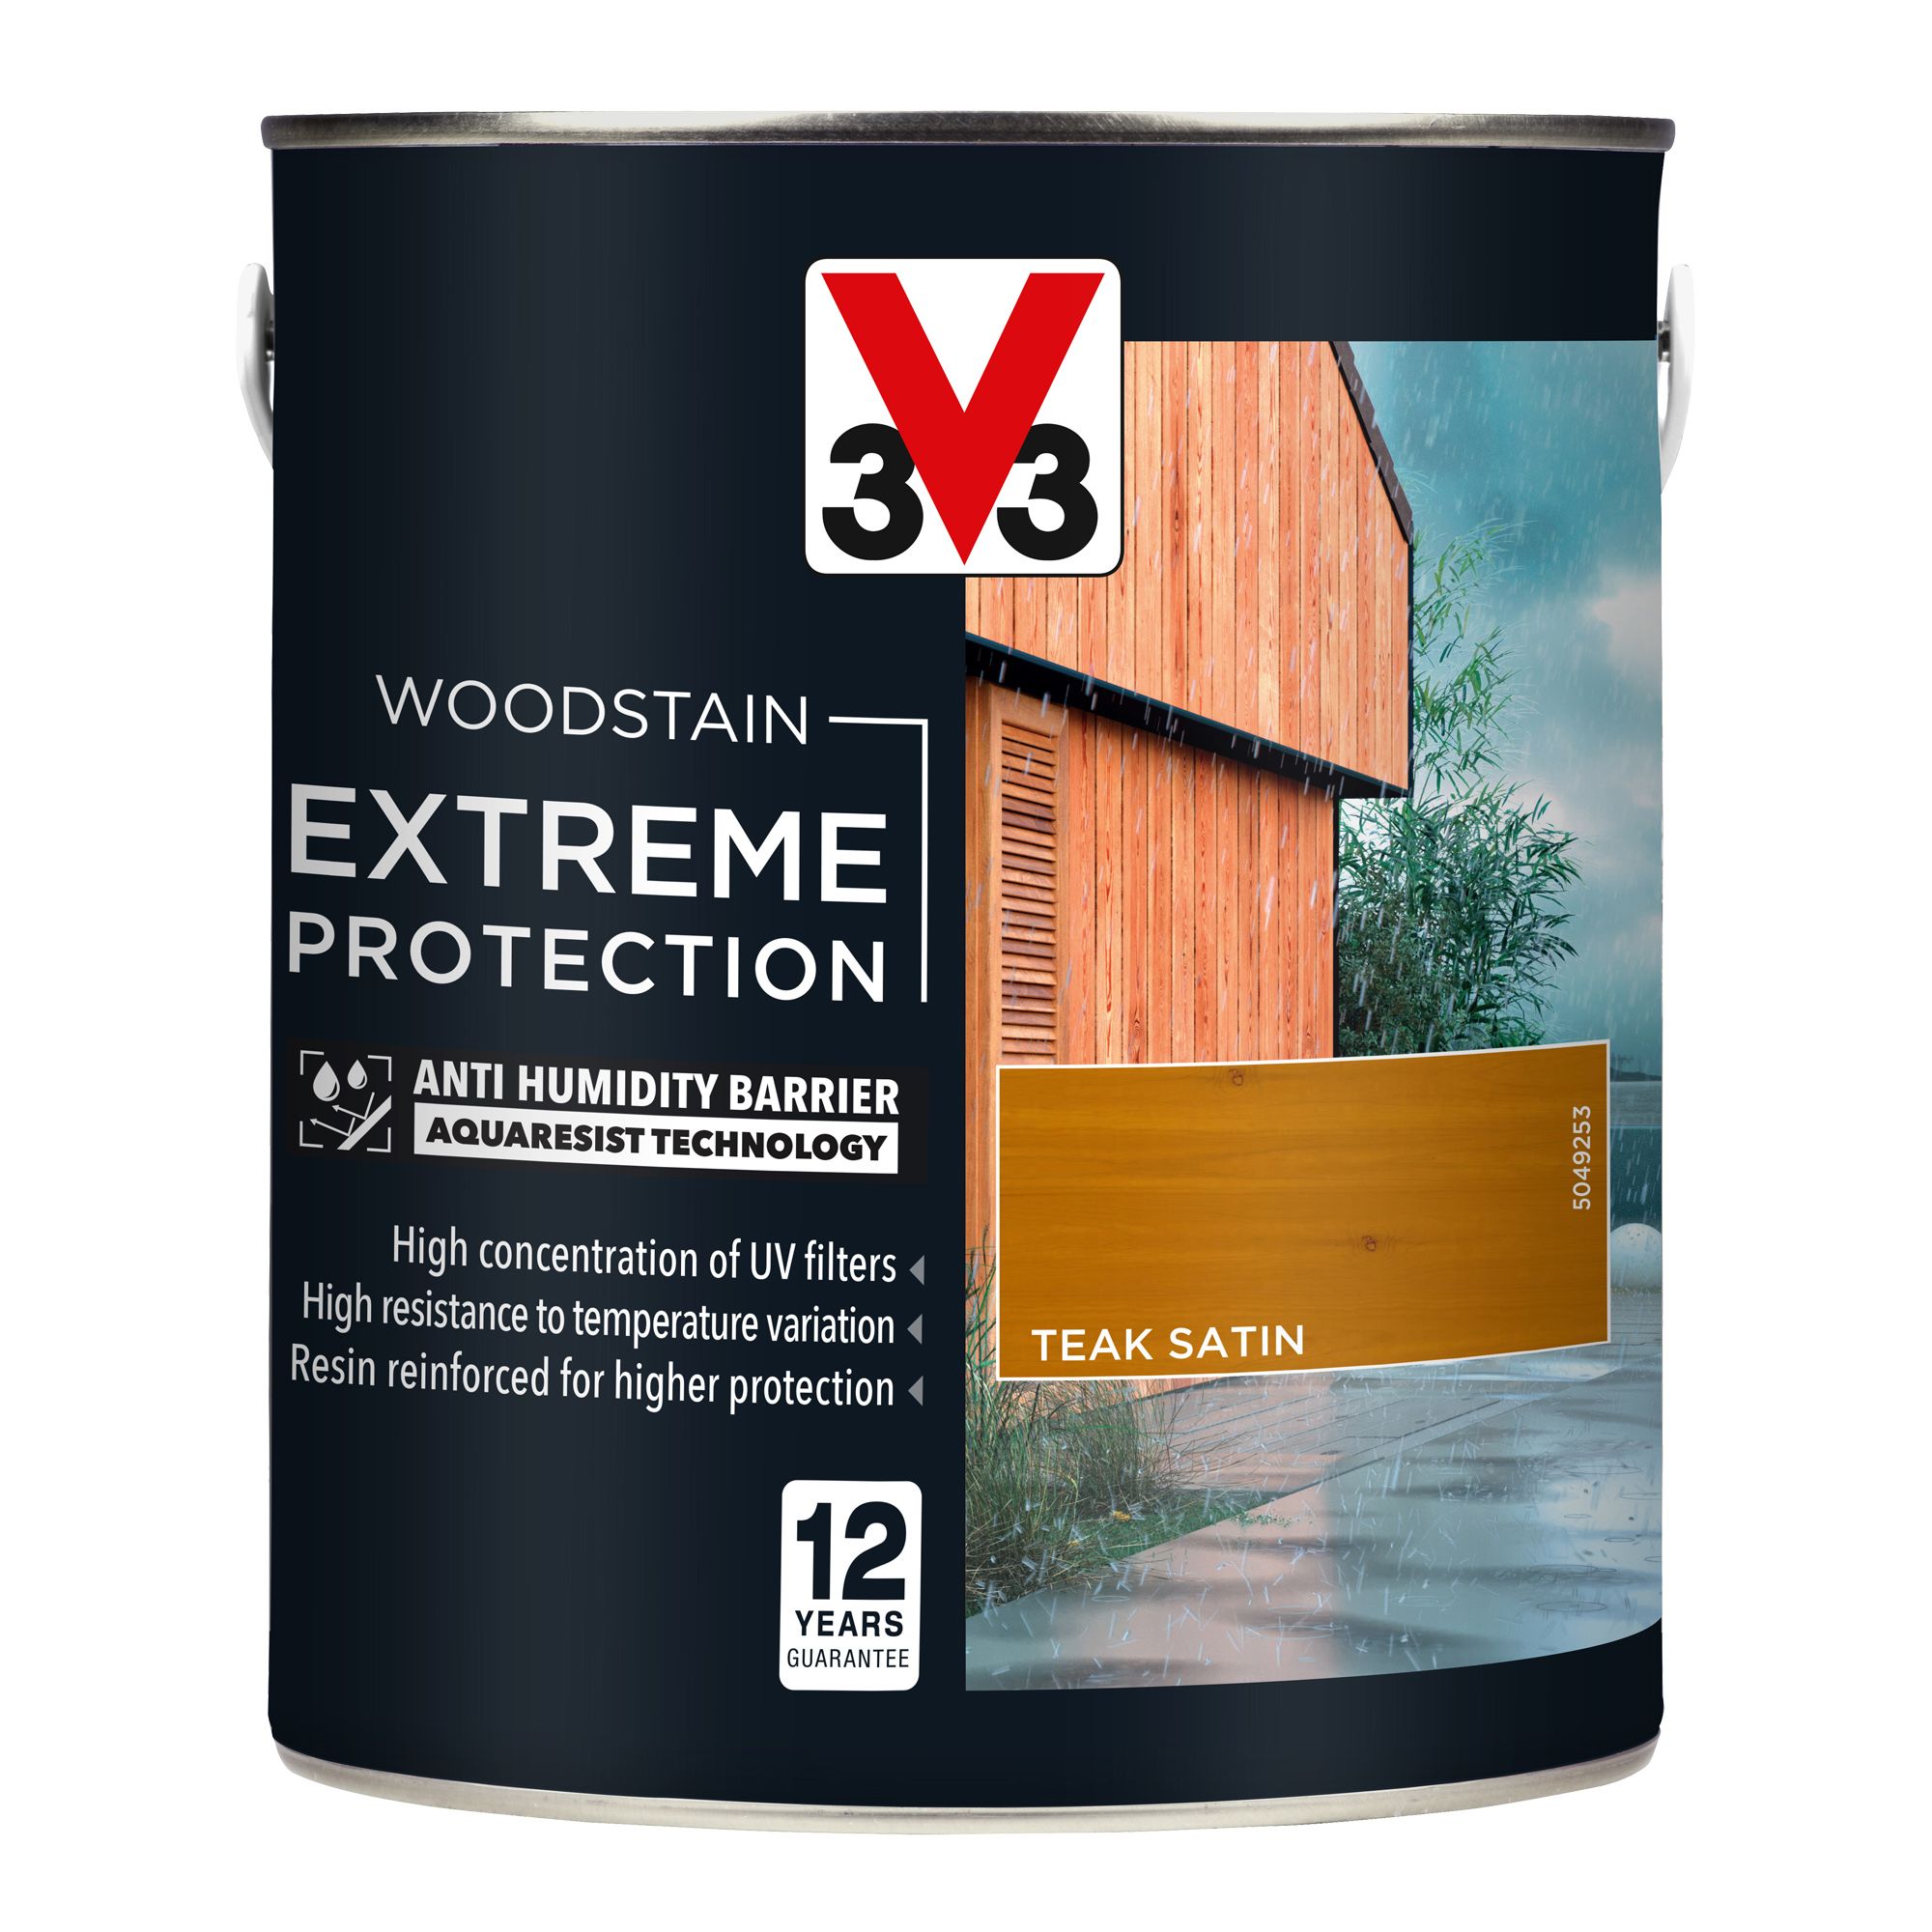 V33 Extreme protection Teak Satin Wood stain, 2.5L